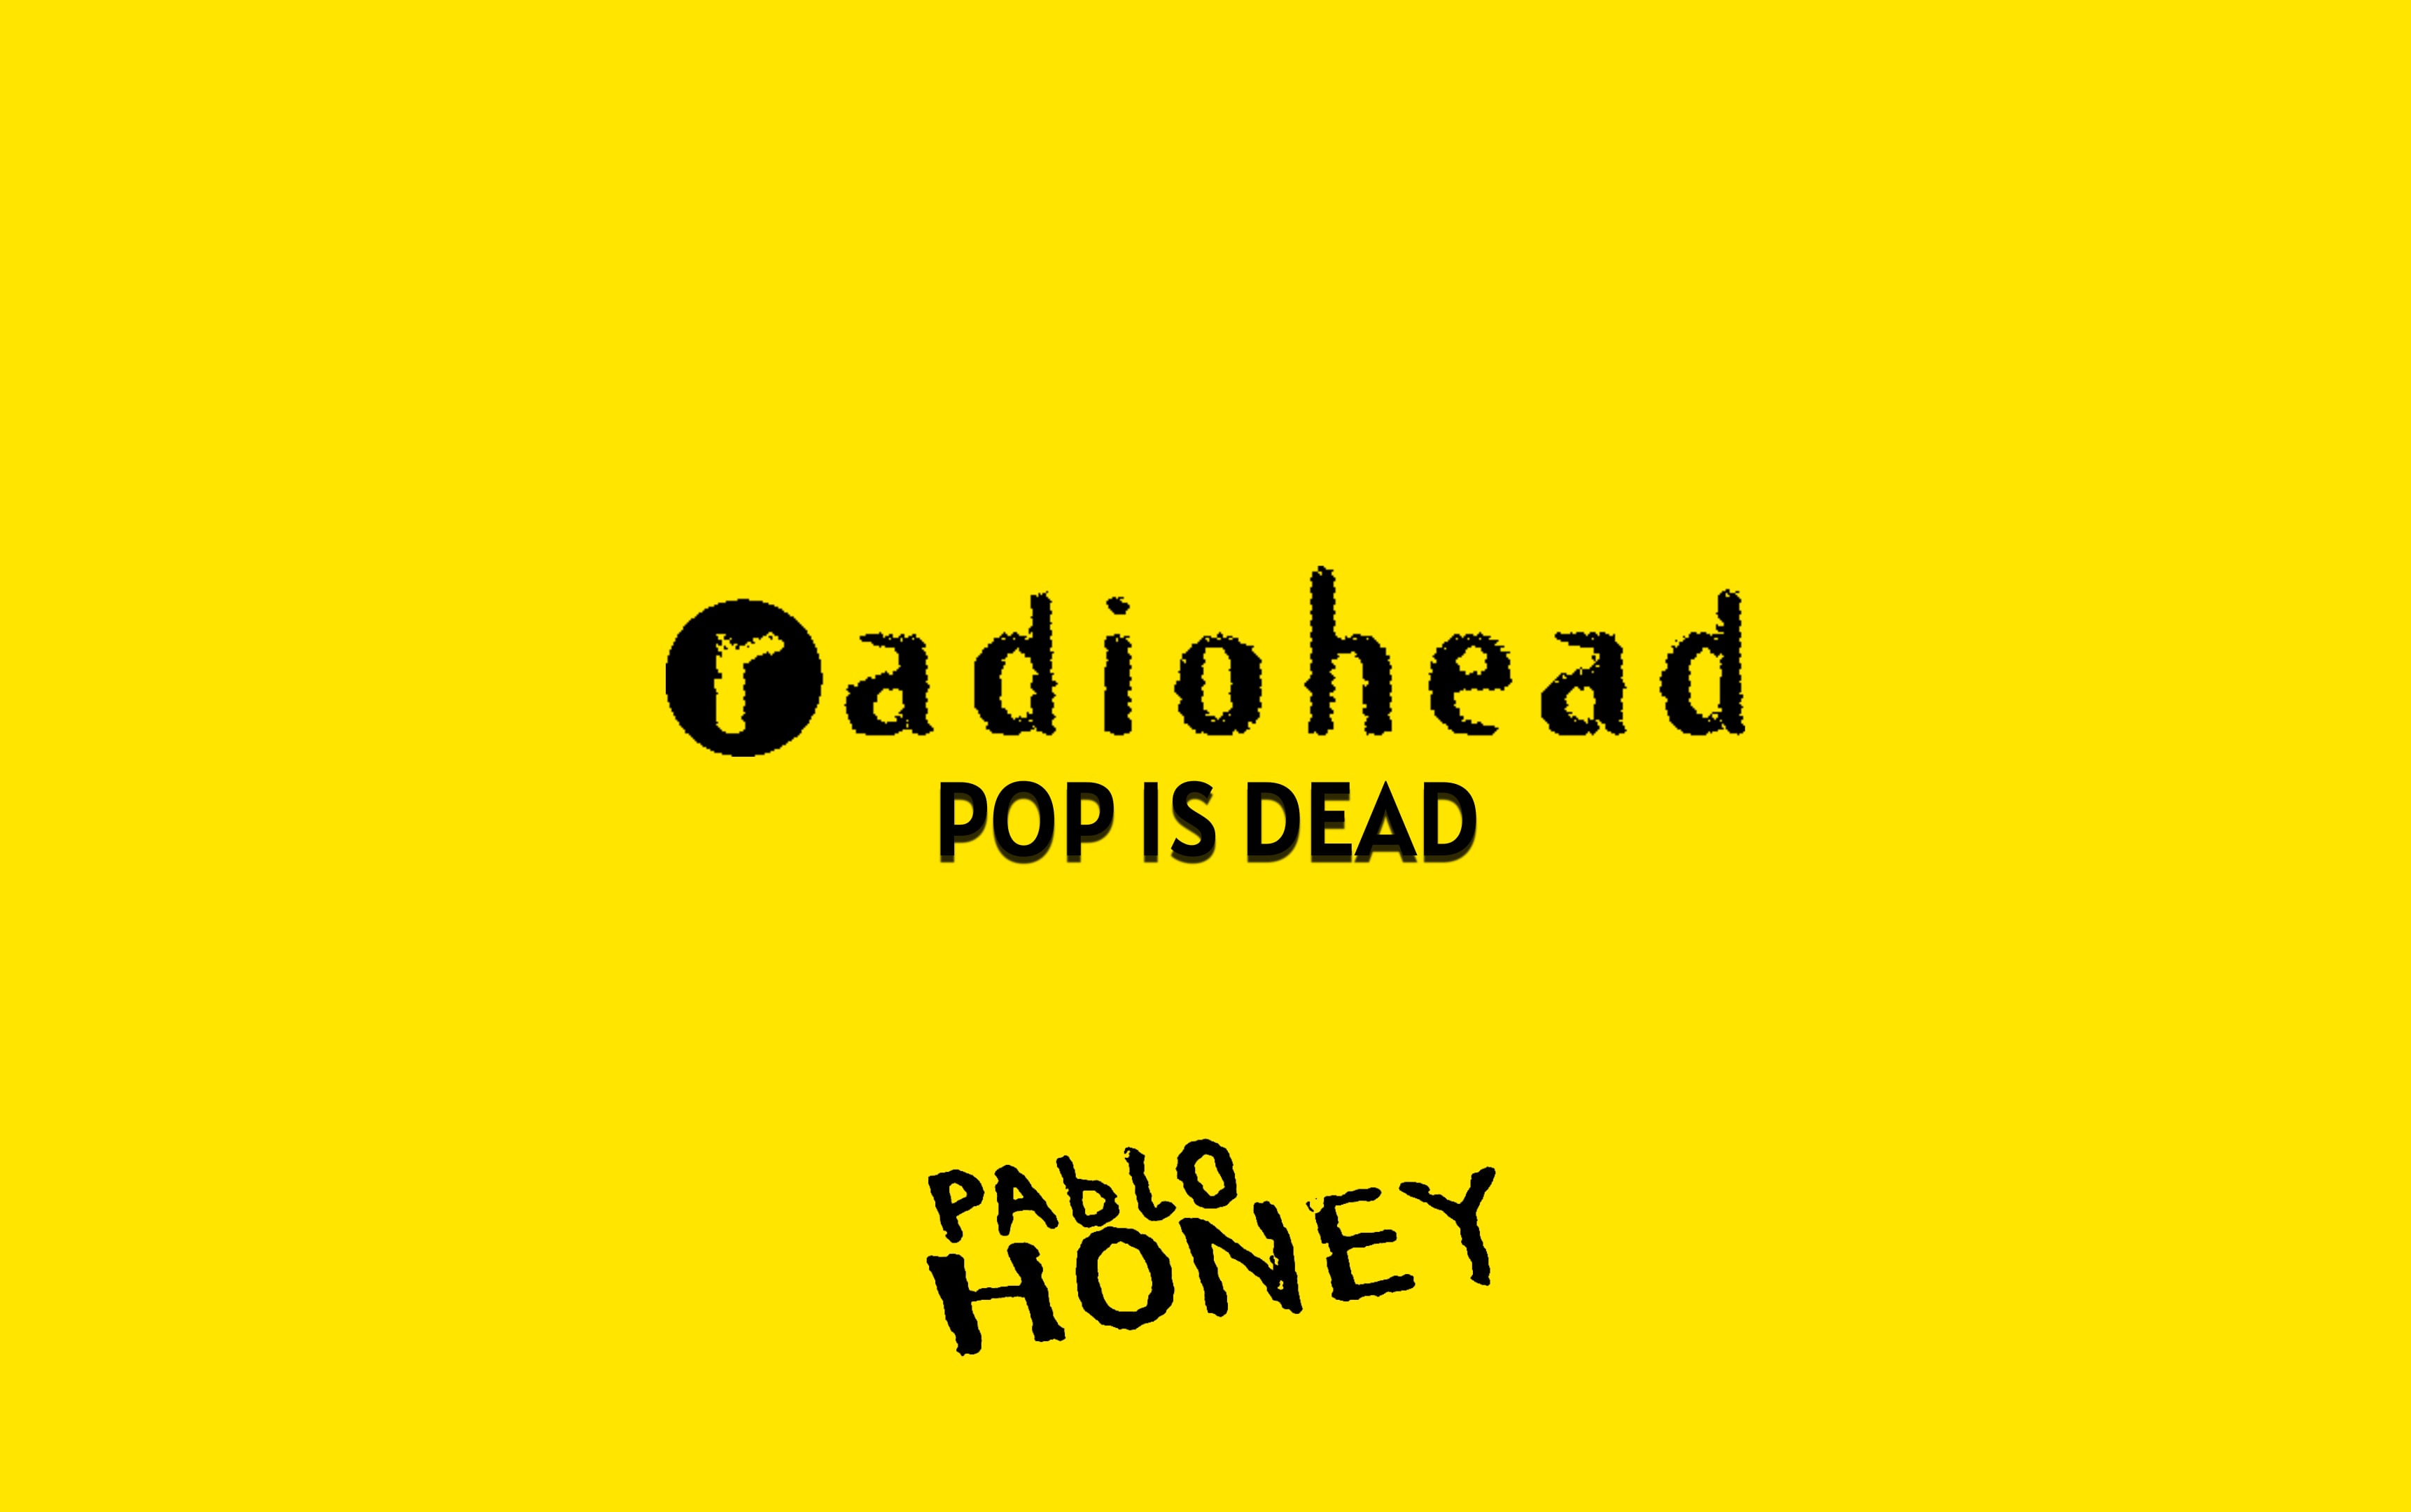 verden tæppe Betydning Radiohead - Pop Is Dead (Official Music Video) on Vimeo